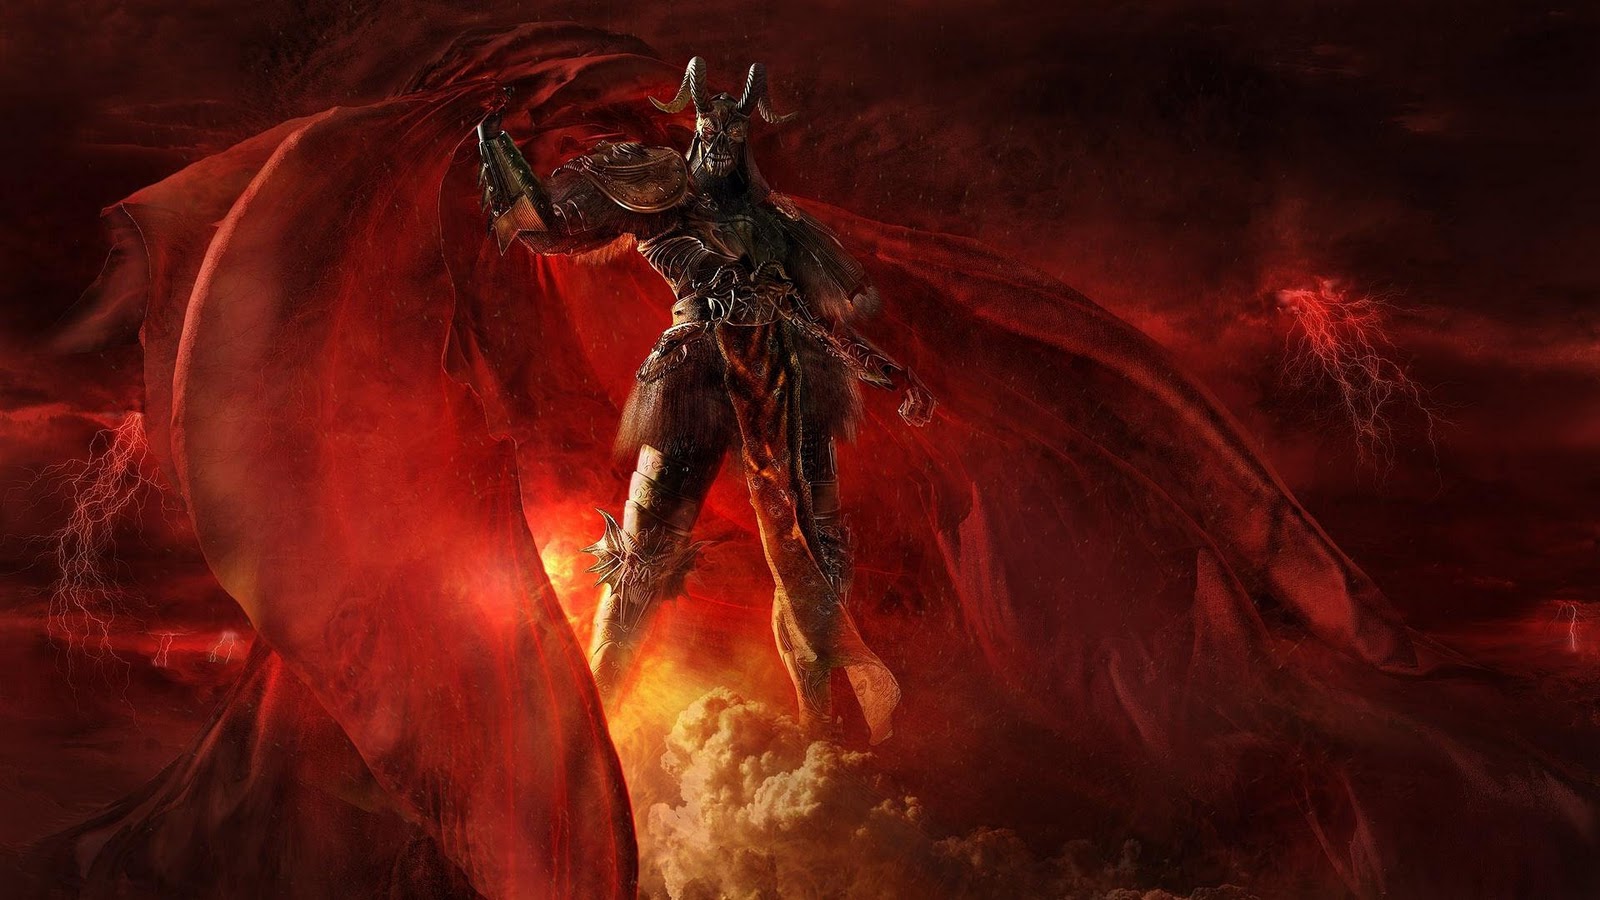 devil wallpapers hd,demon,cg artwork,mythology,dragon,fictional character